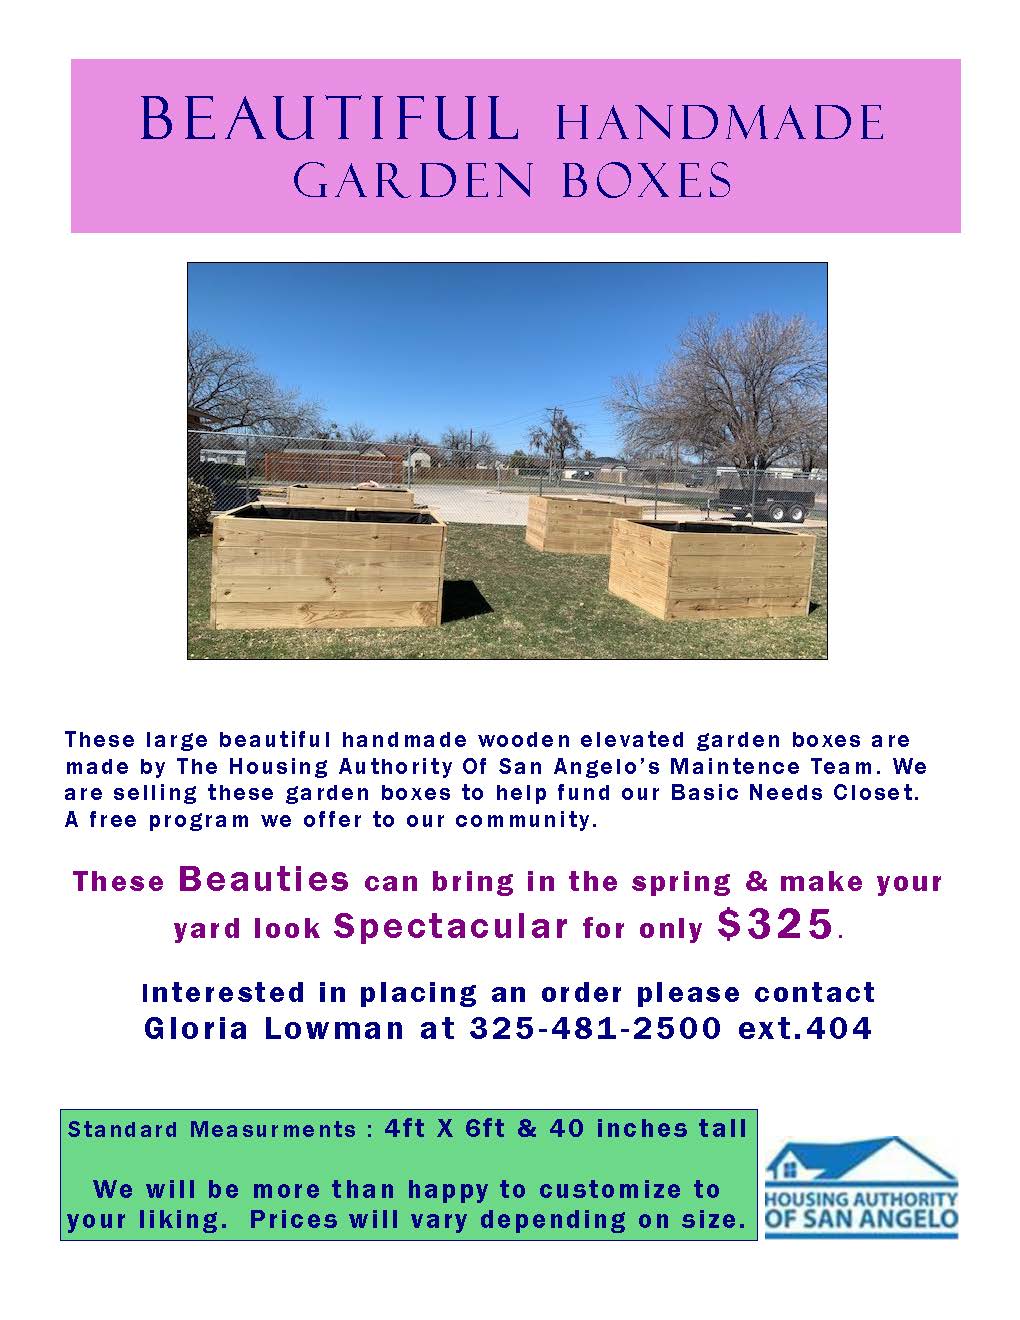 Community Garden Flyer